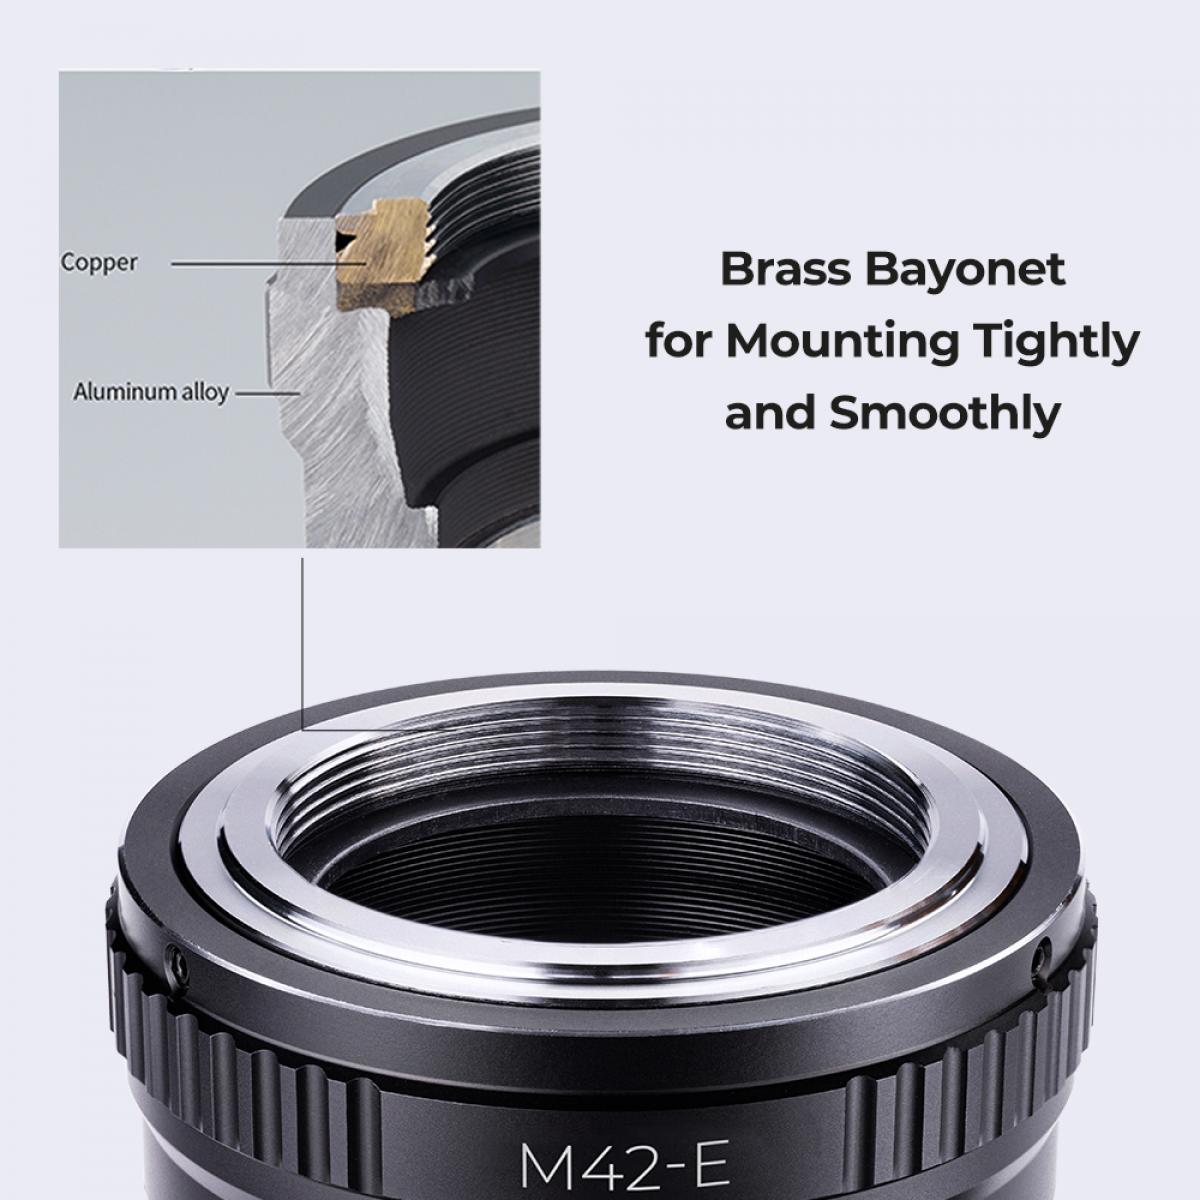 Lens Mount Adapter M42 to Sony E NEX Mount Camera 